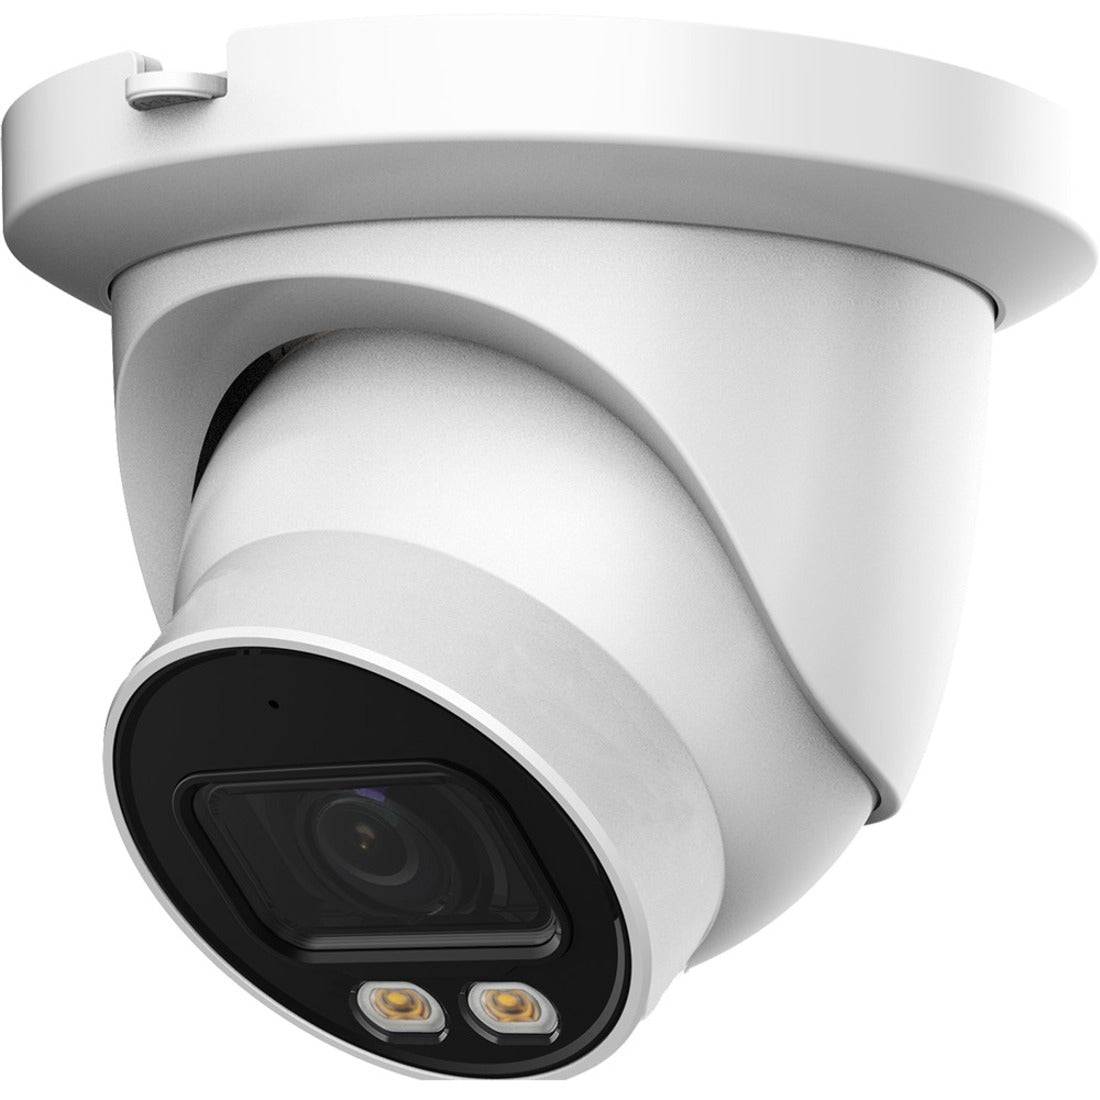 Dahua N45EJN2 4MP Night Color 2.0 Fixed-lens Network Eyeball Camera, Outdoor, IP67, 5 Year Warranty